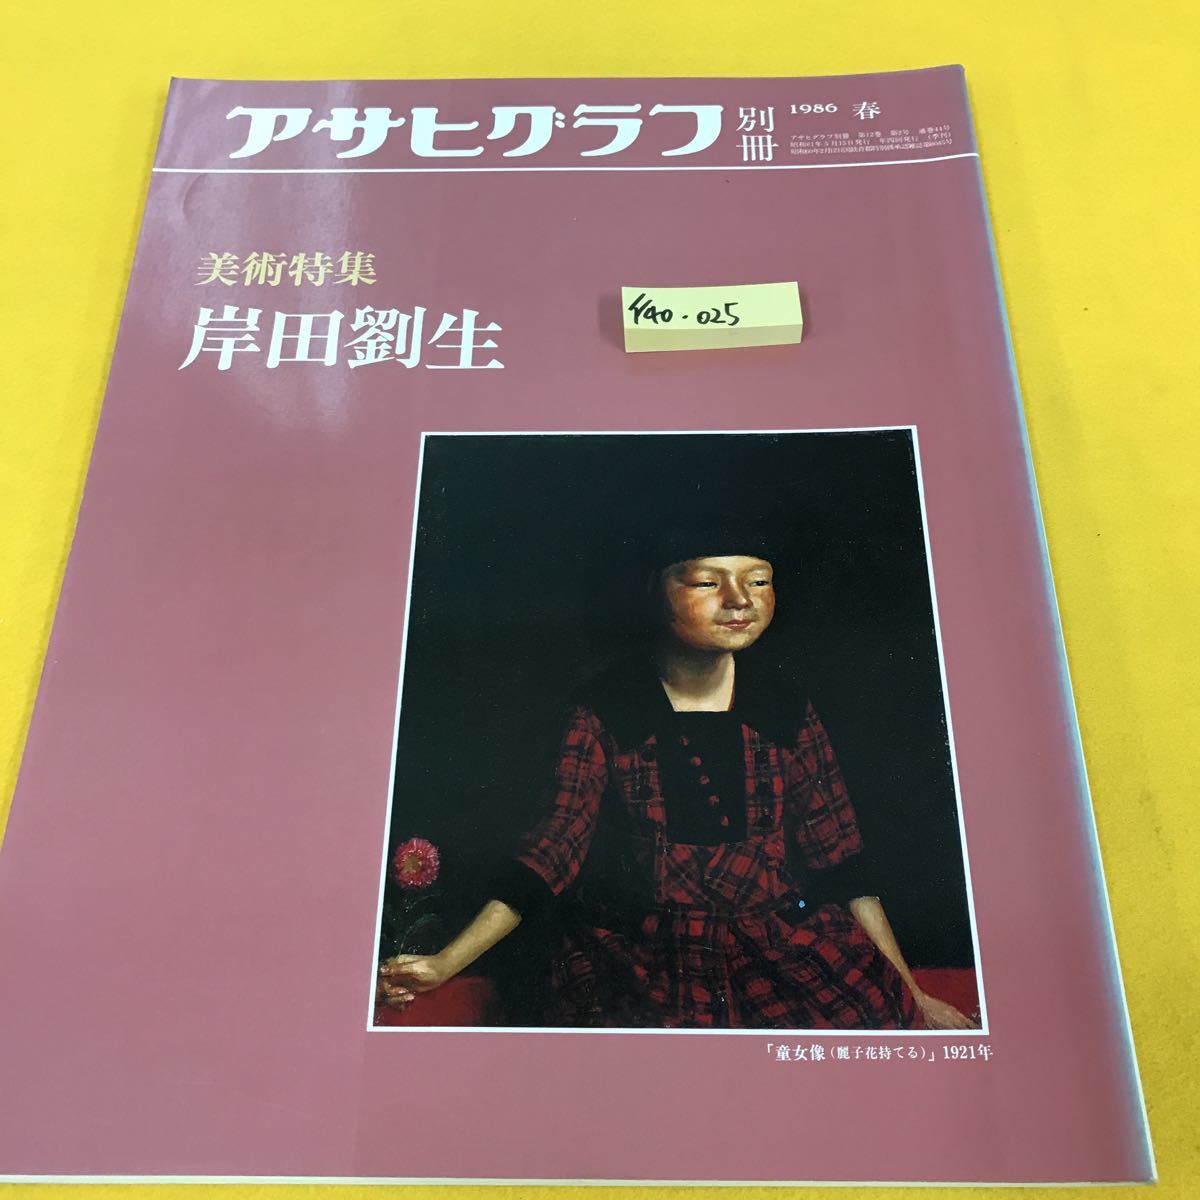 F40-025 アサヒグラフ 別冊 '86 春 美術特集 岸田劉生 朝日新聞社